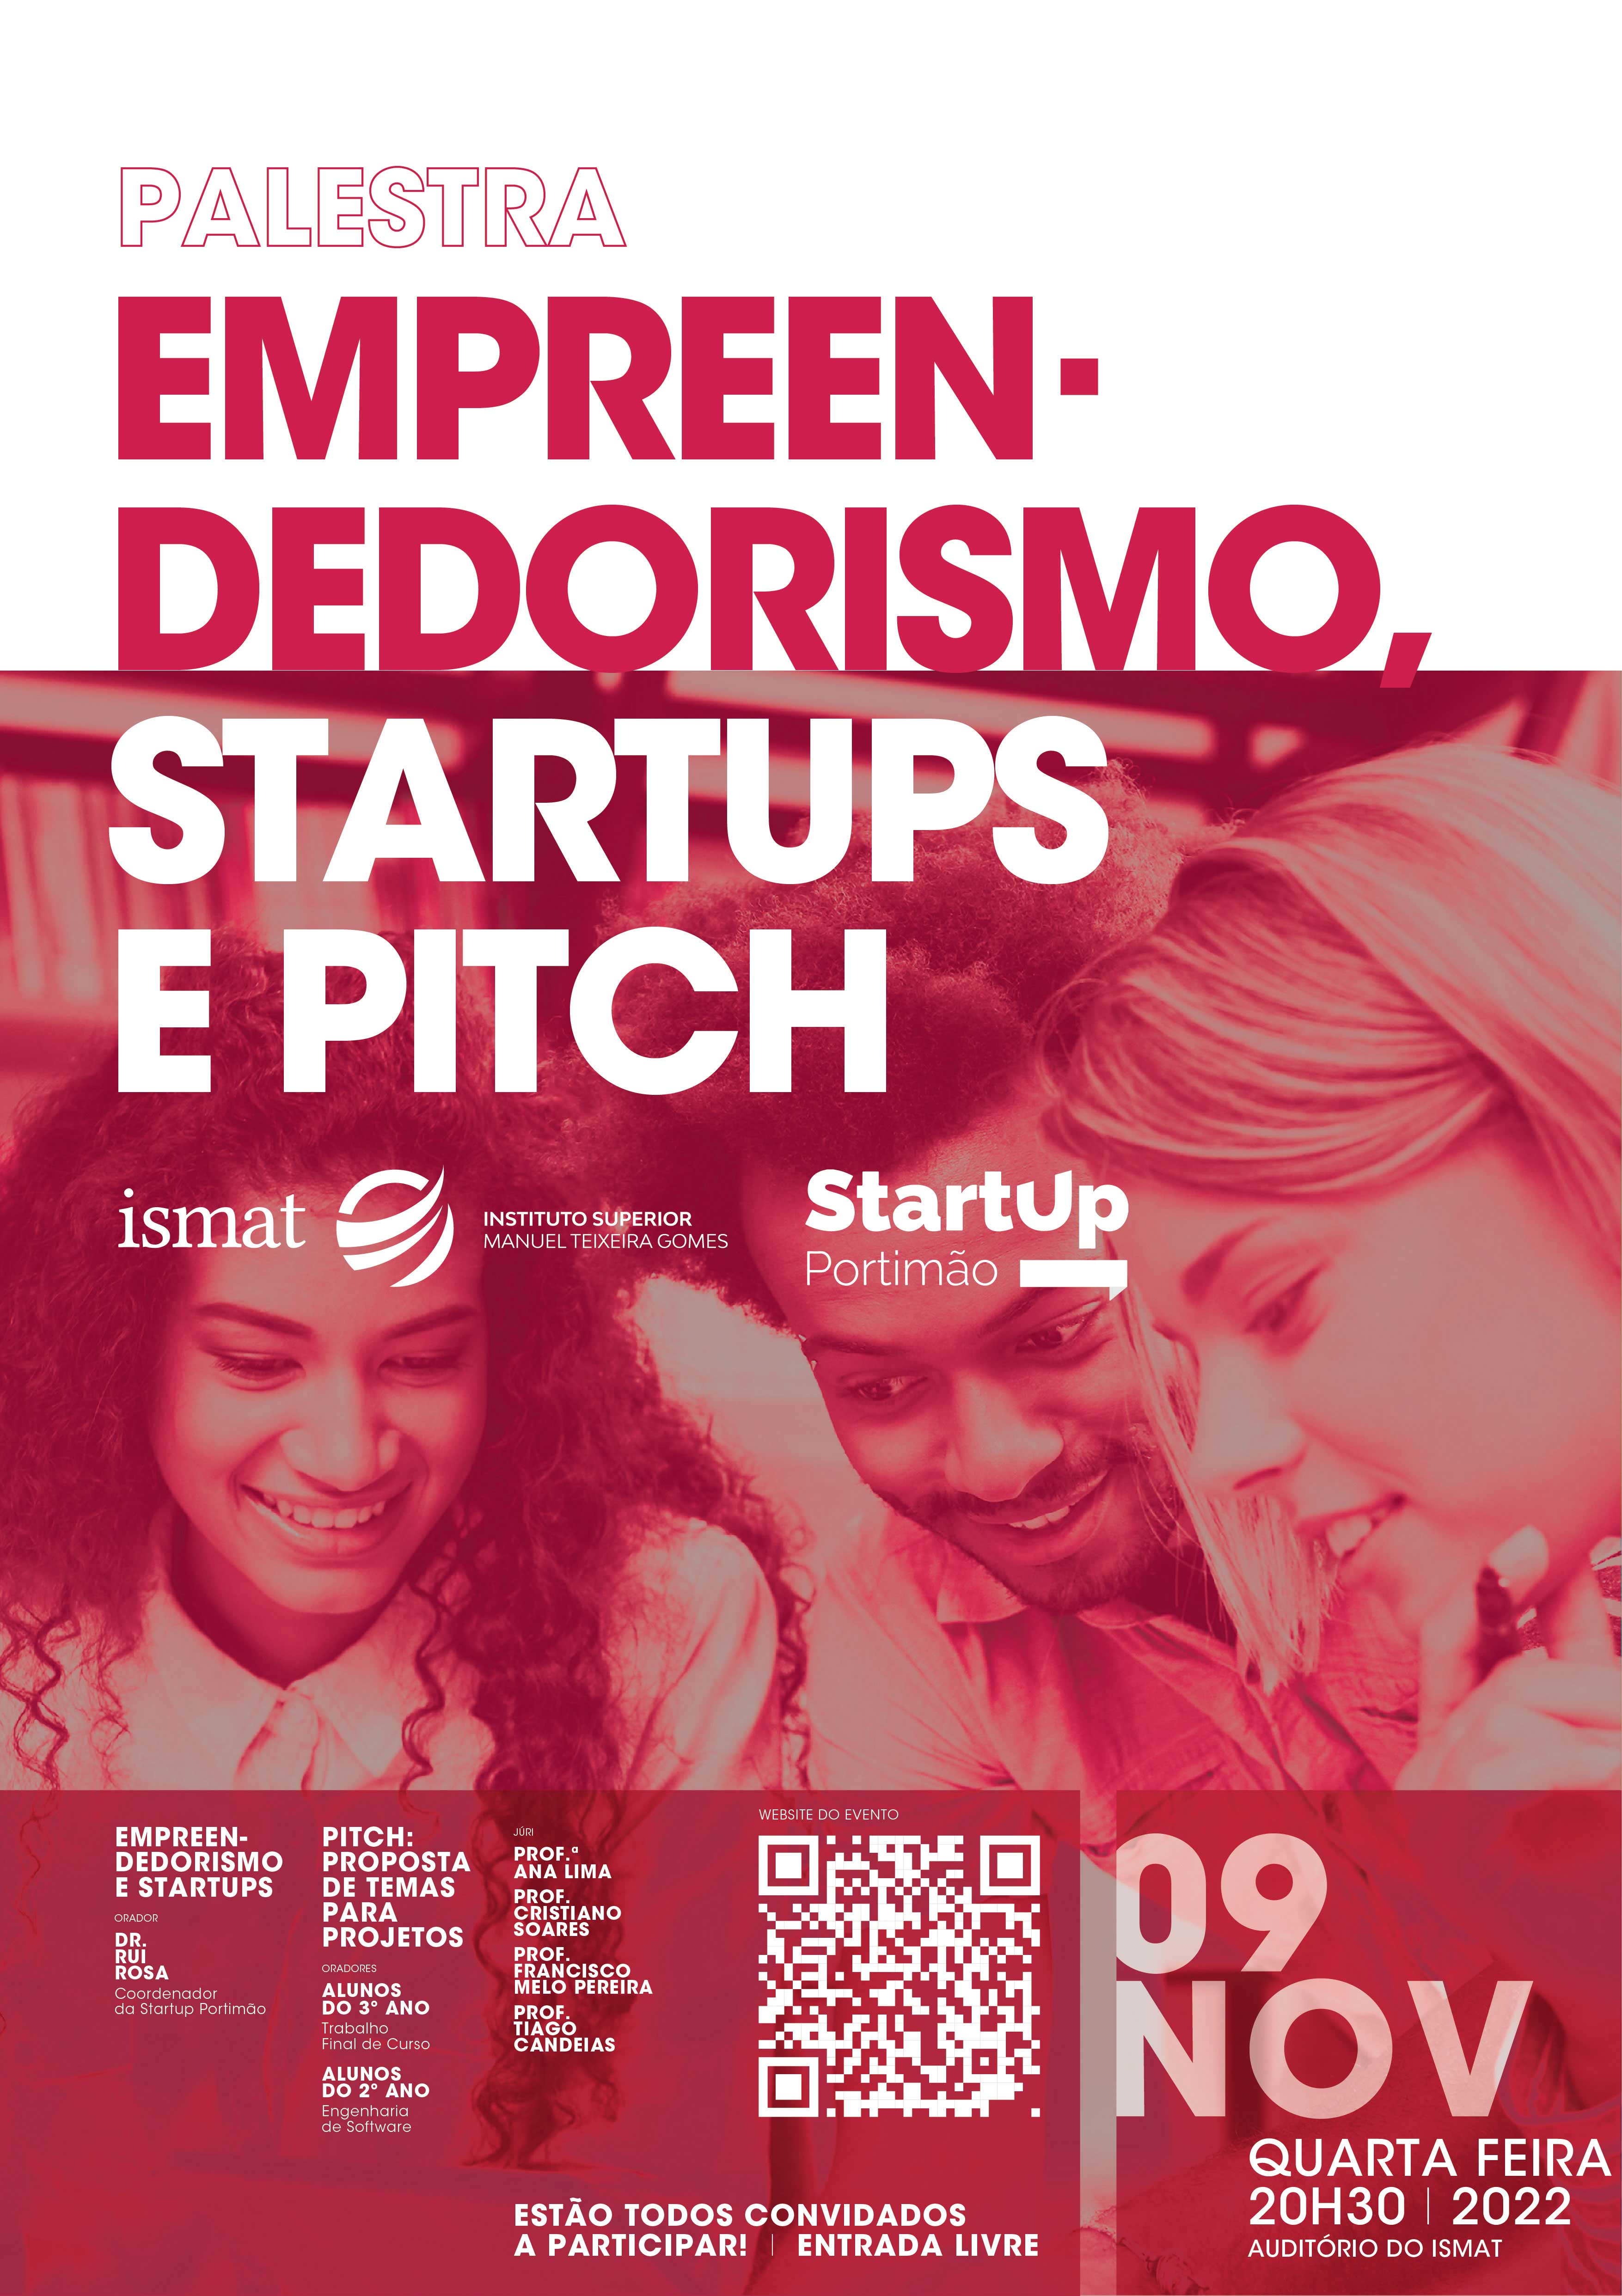 Palestra Empreendedorismo Startups e Pitc ISMAT 22